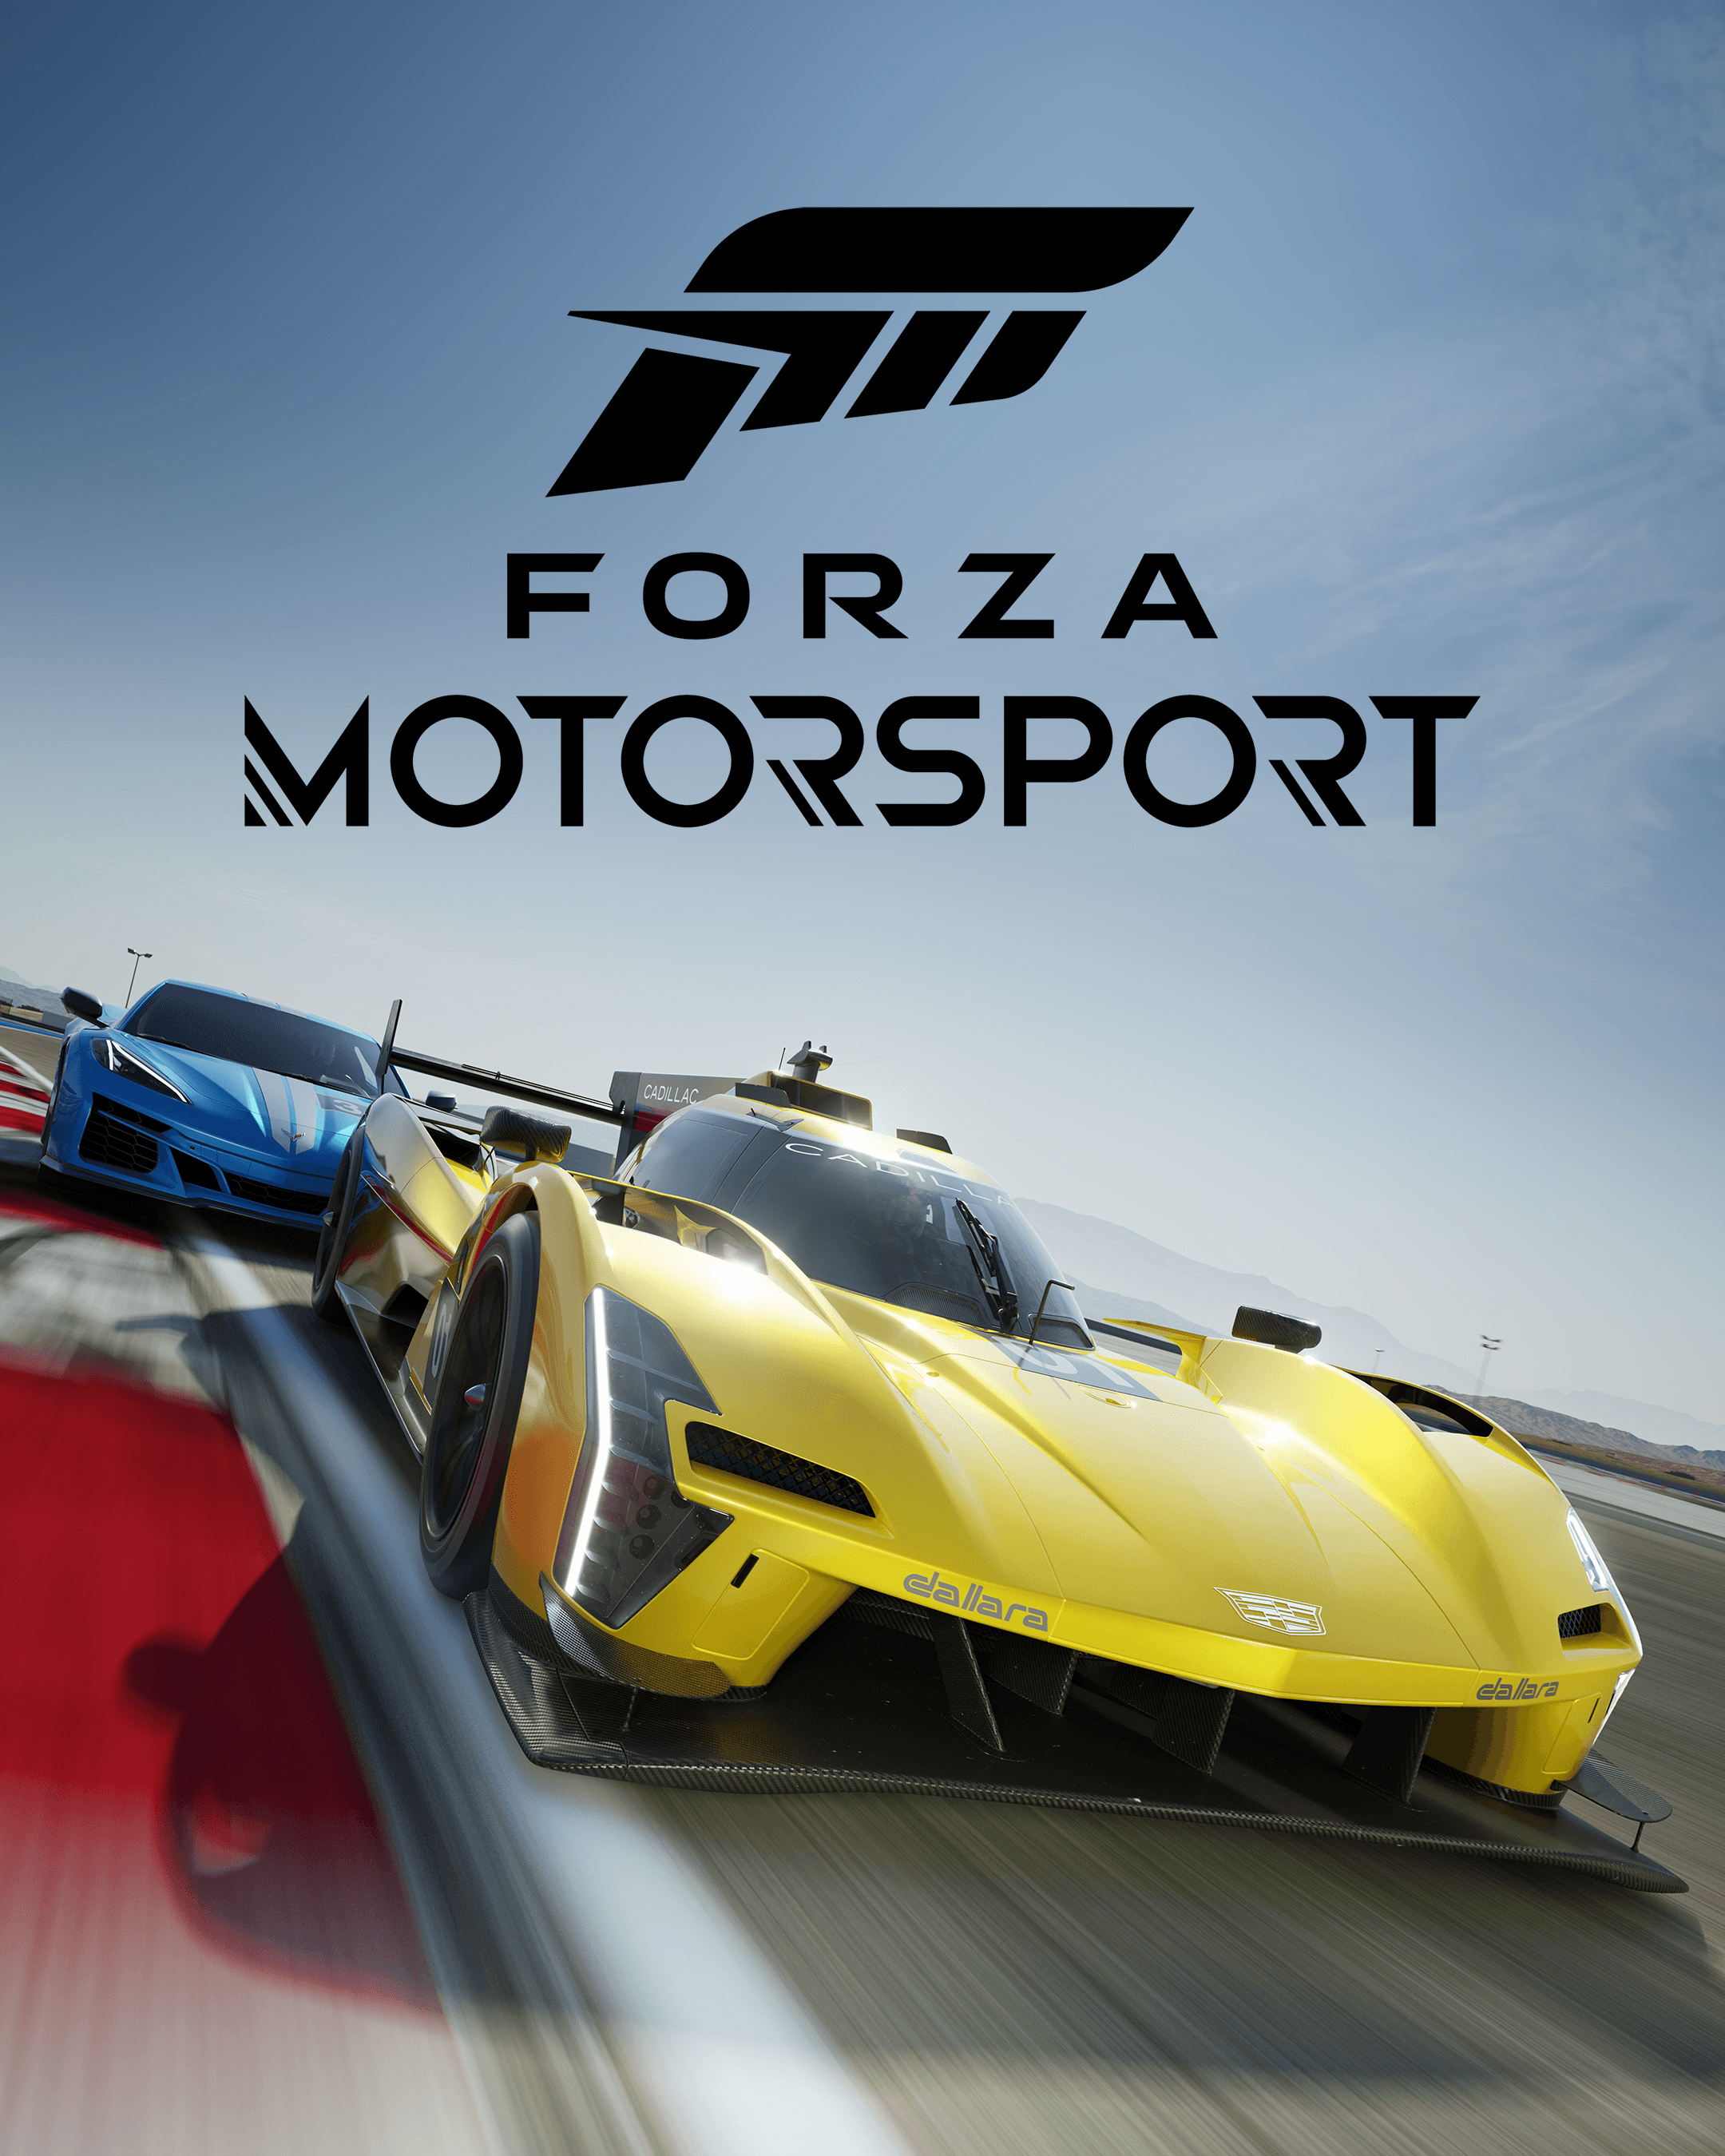 Wallpaper Forza Motorsport 7 4k E3 2017 Xbox One X Games 13744